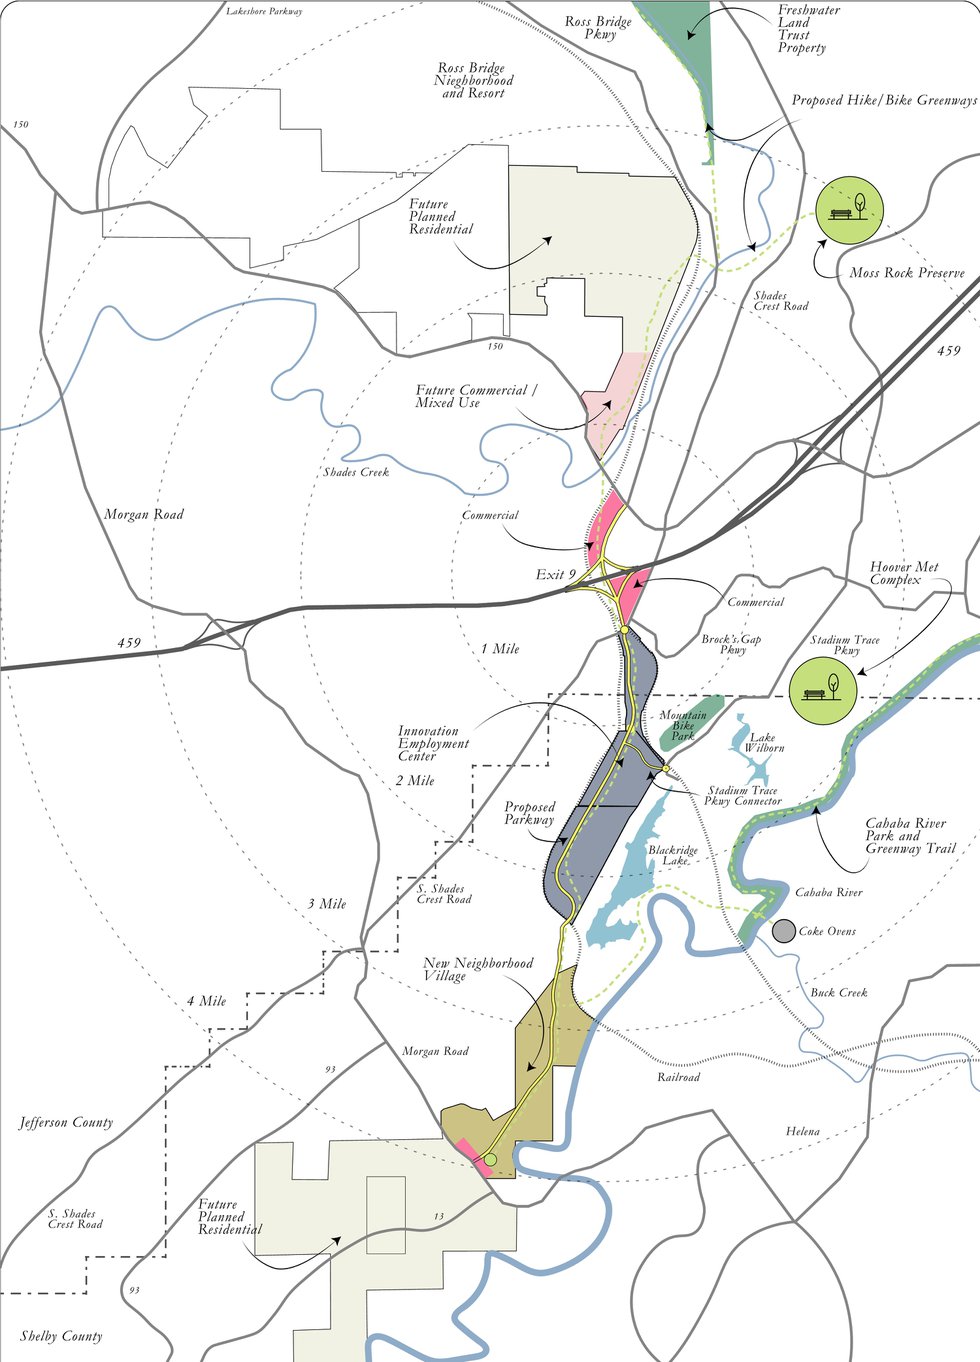 West Hoover corridor land use plan 10-12-20